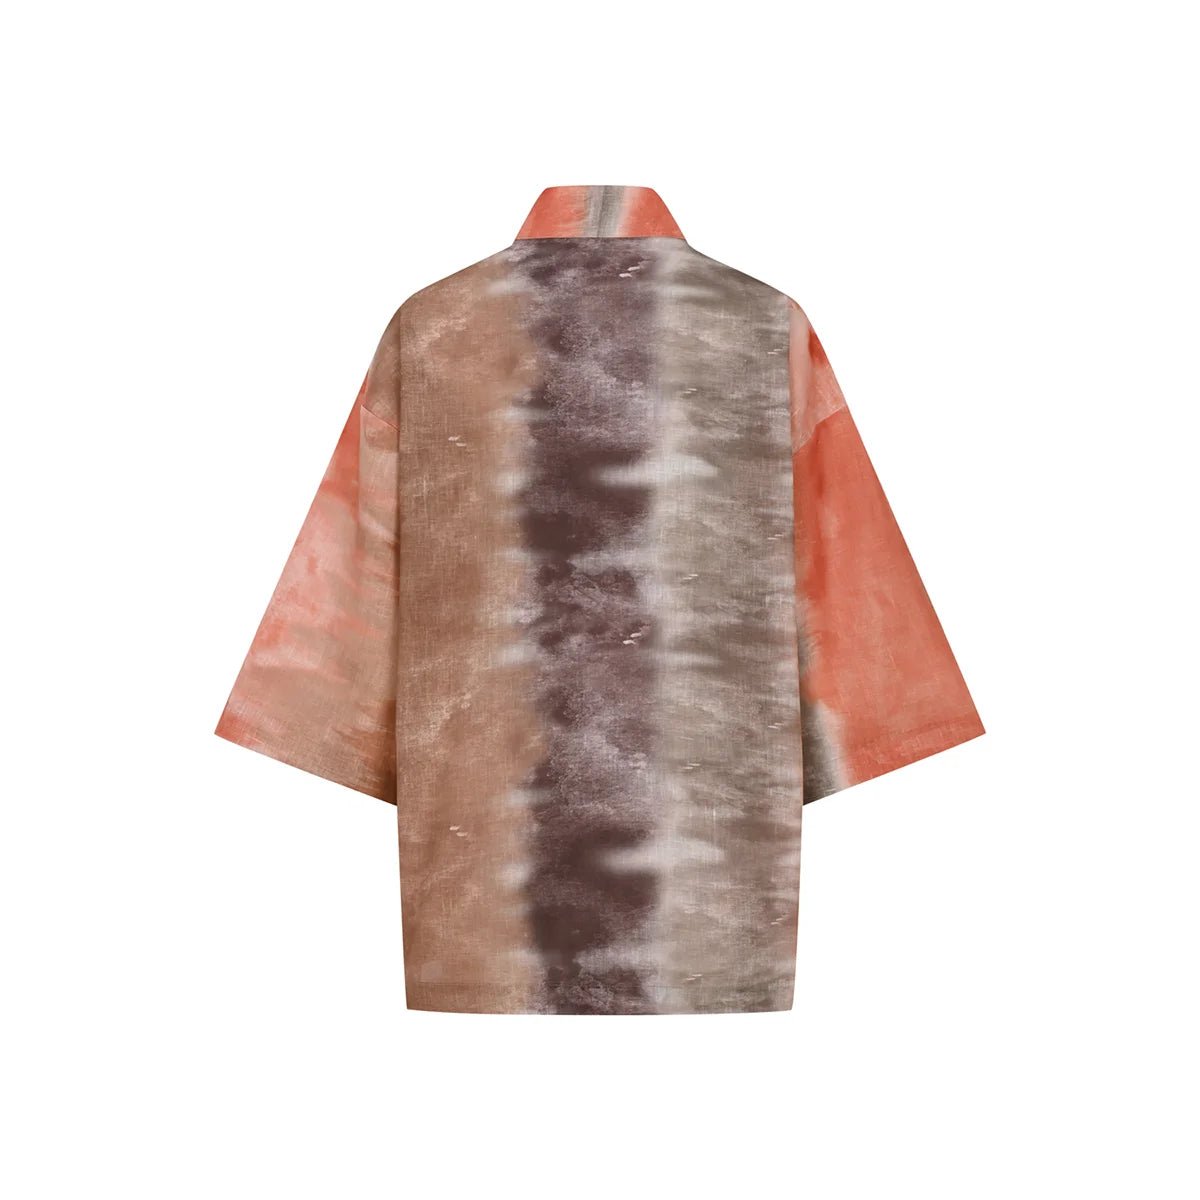 MELLONA Oversize Men Kimono - Brown/Orange/Cream - sabbia